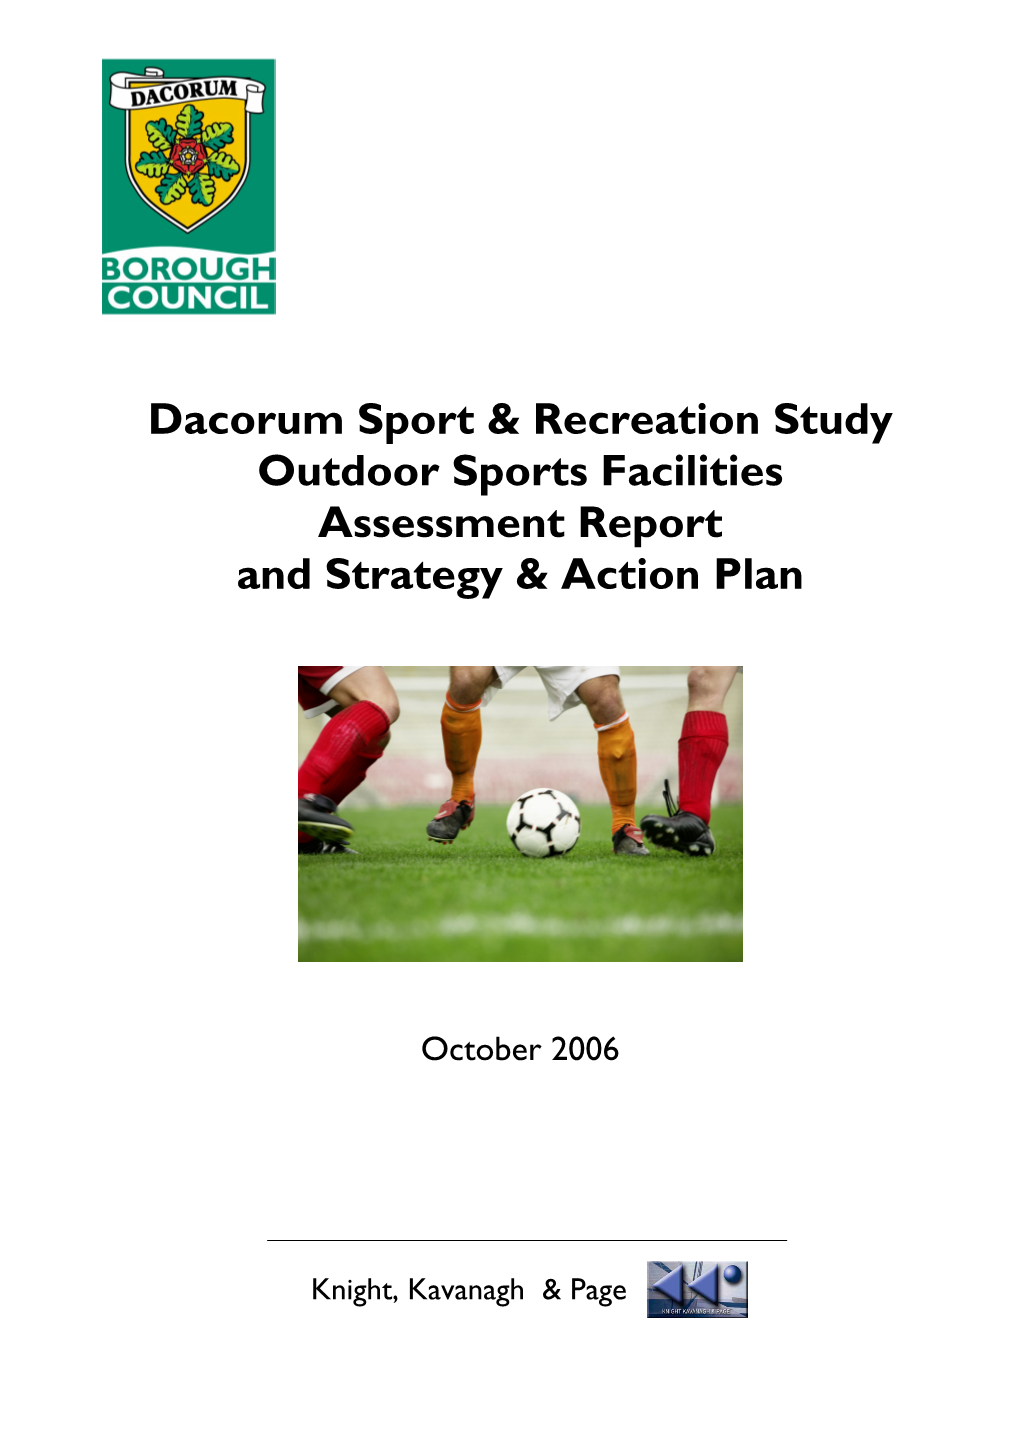 Dacorum Sport & Recreation Study Outdoor Sports Facilities